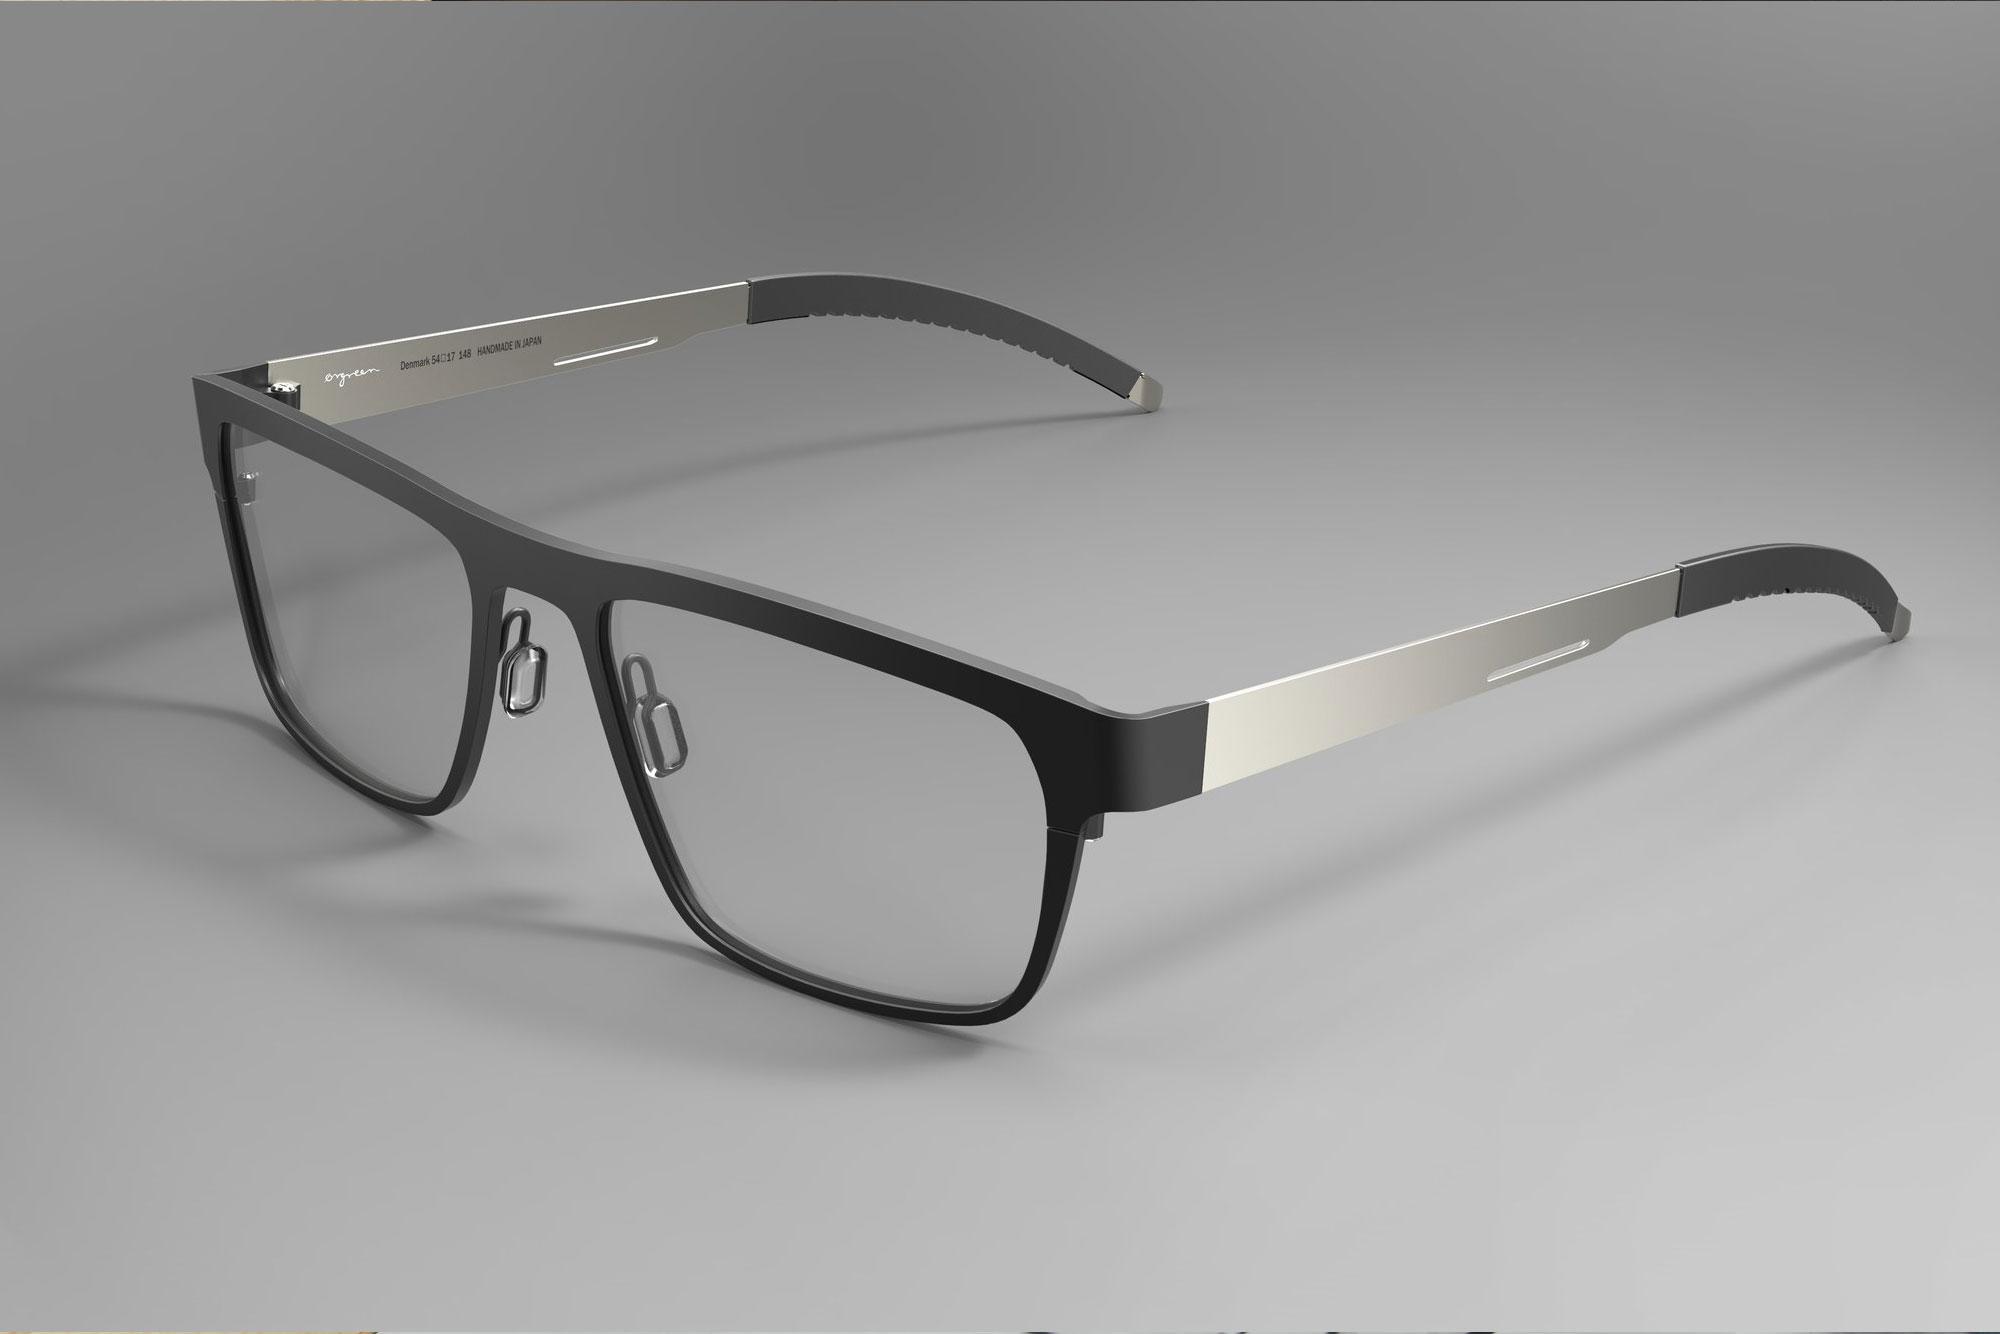 Market Optical glasses frames and lenses